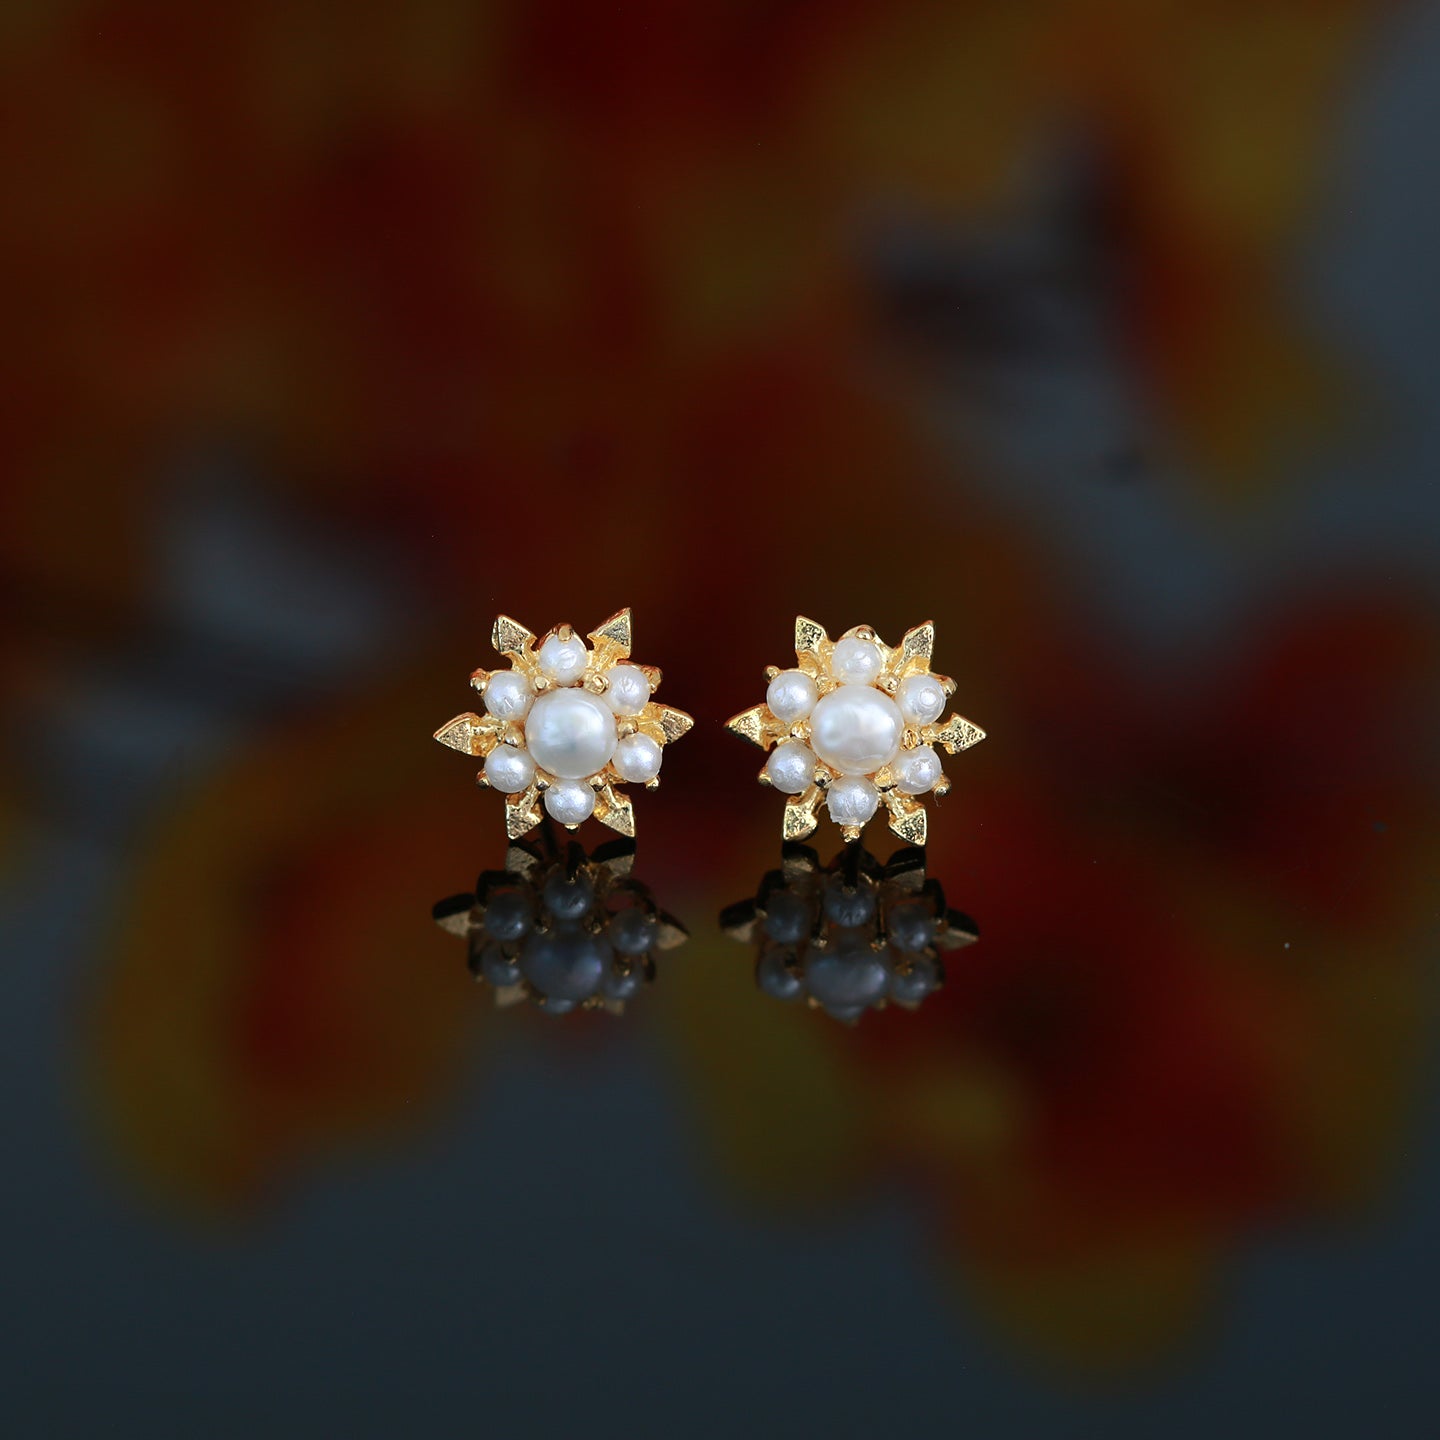 Small Multicolor CZ Stones Pearl stud Earrings | 18K Gold CZ American Diamond Pear cut crystal flower Stud Earrings for Women | Gift for her